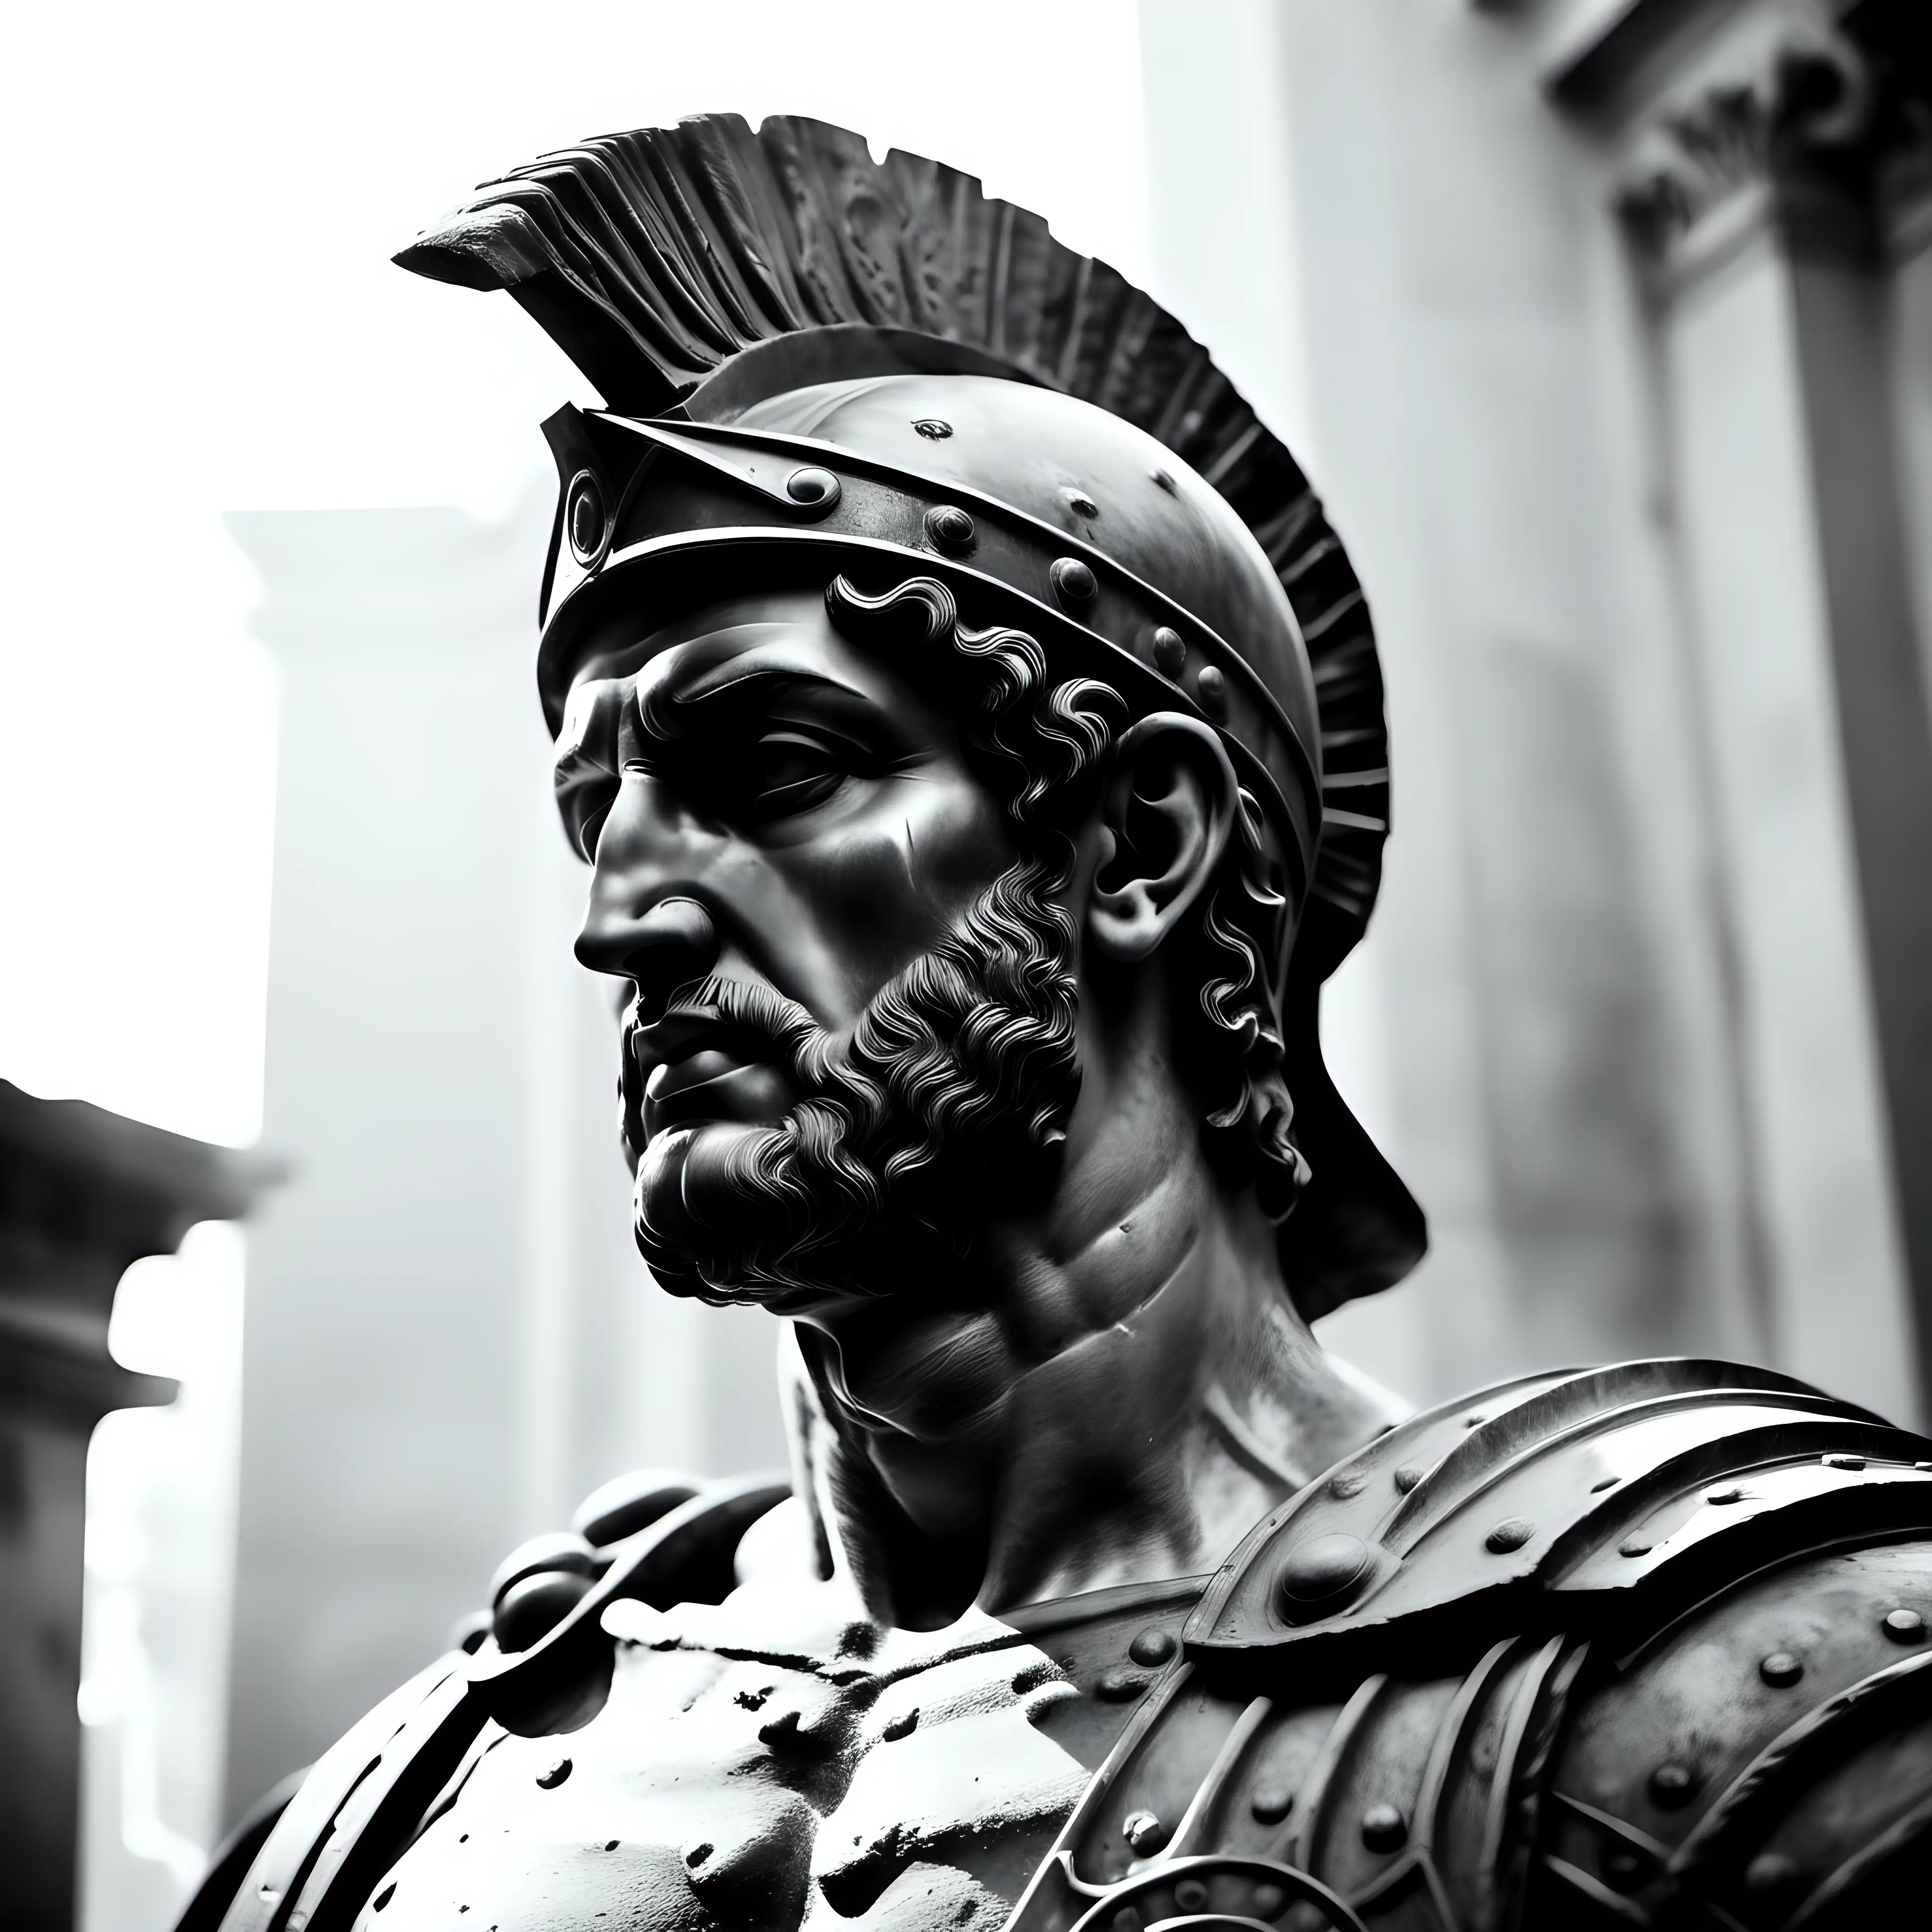 Majestic Ancient Roman Gladiator Statue in Dramatic Black and White